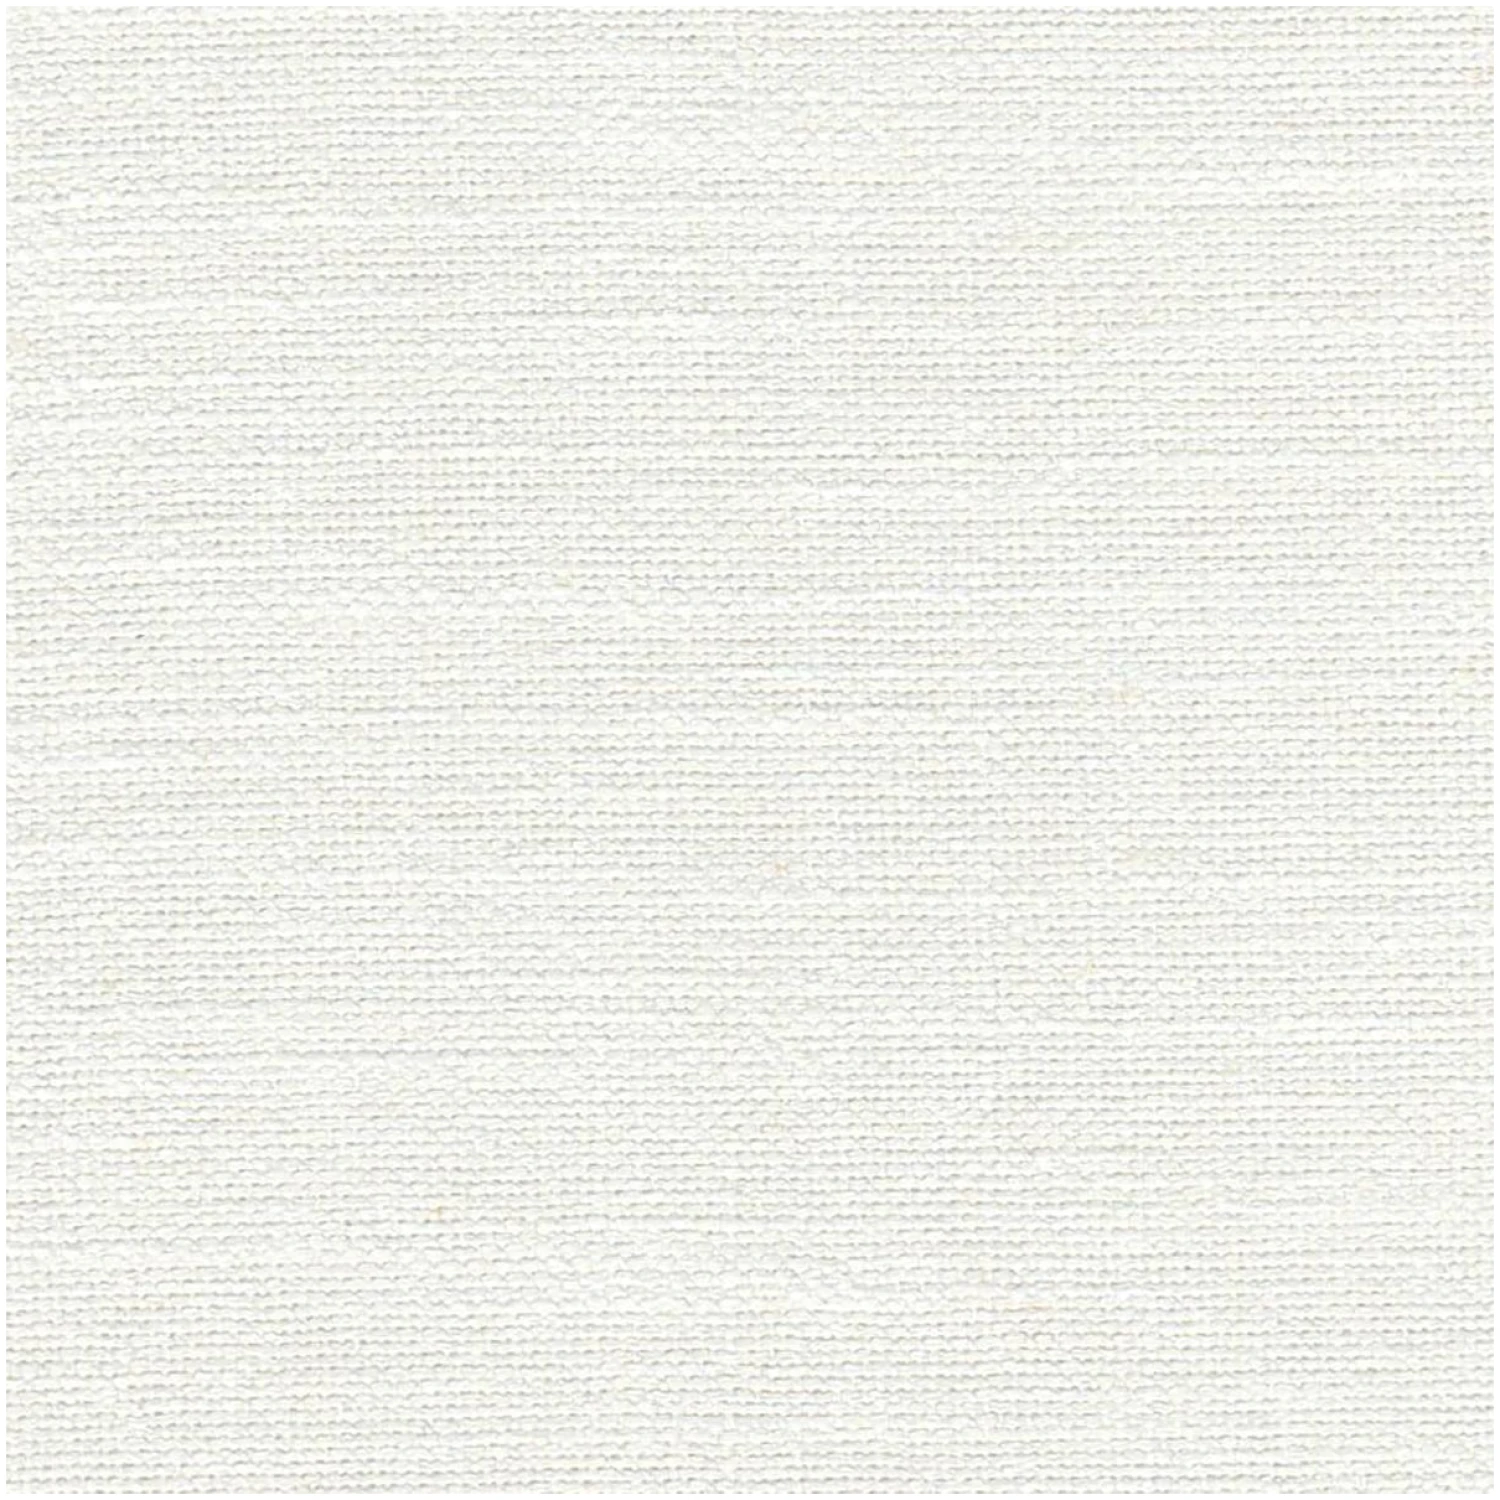 Lisann/White - Multi Purpose Fabric Suitable For Drapery